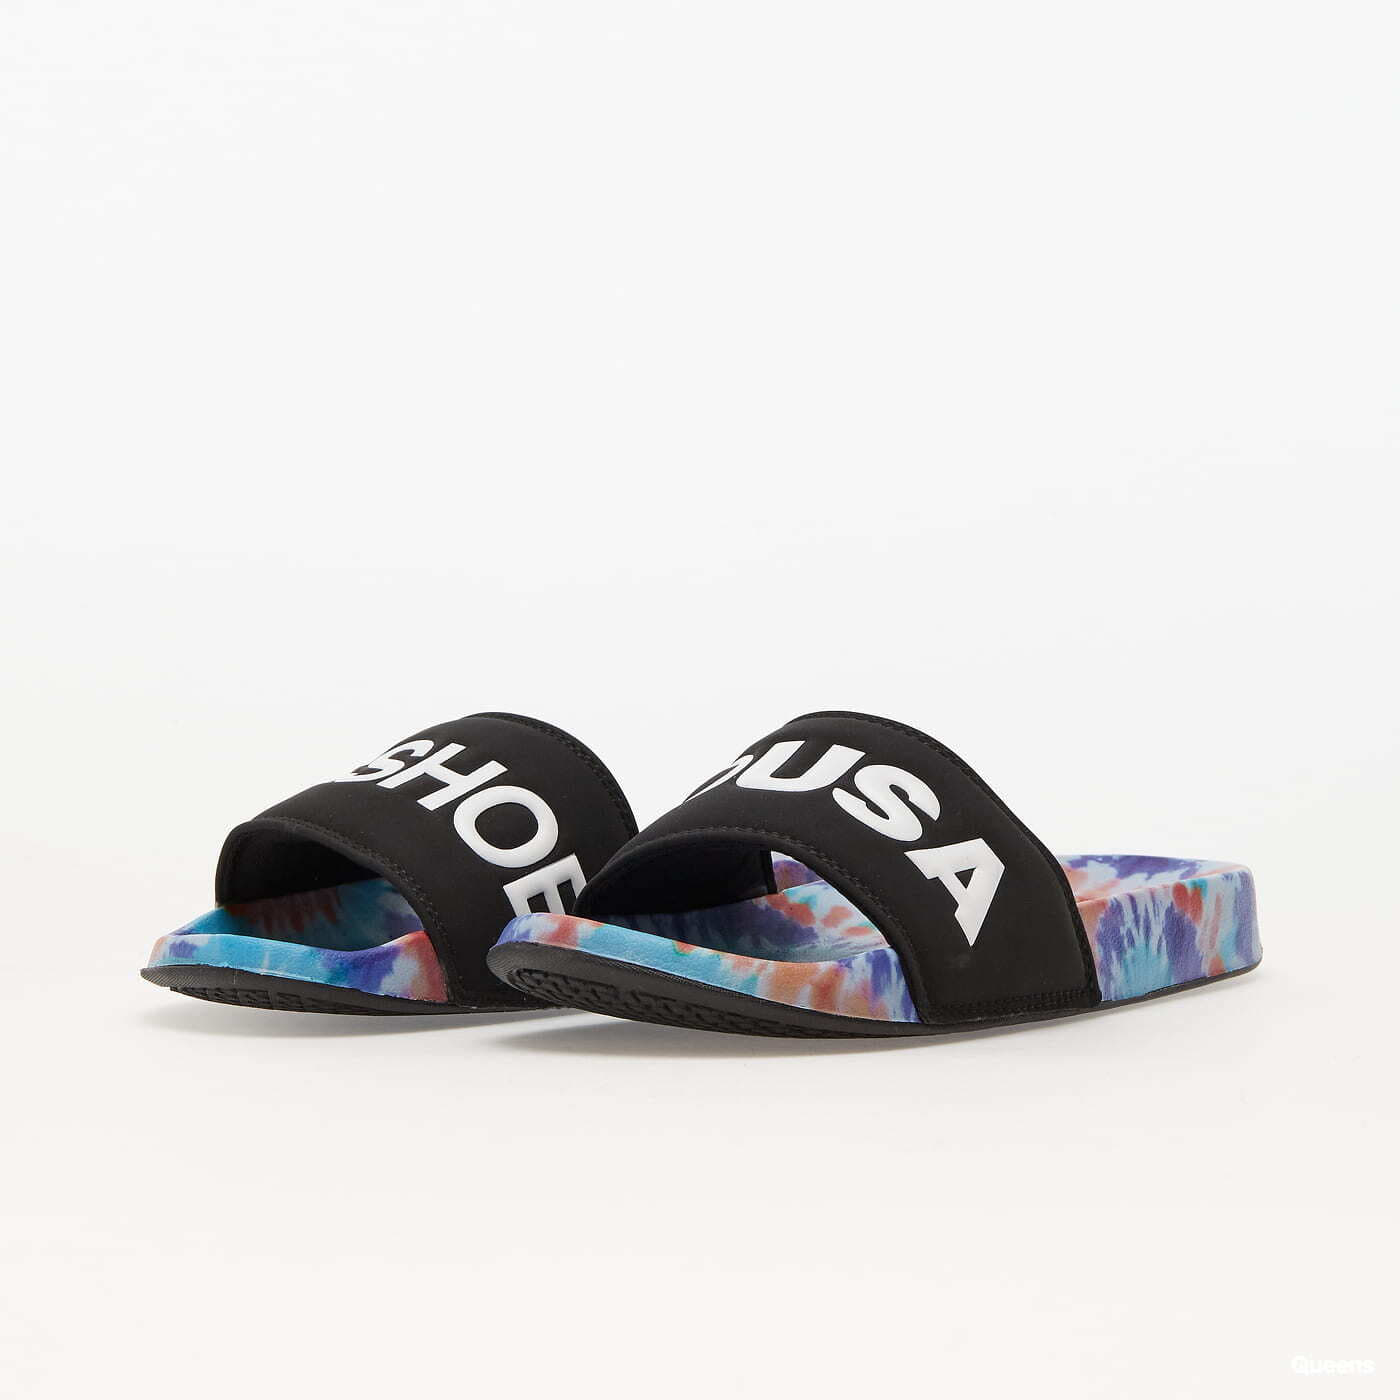 Summer shoes, sneakers and flip-flops DC Slide primary tie dye